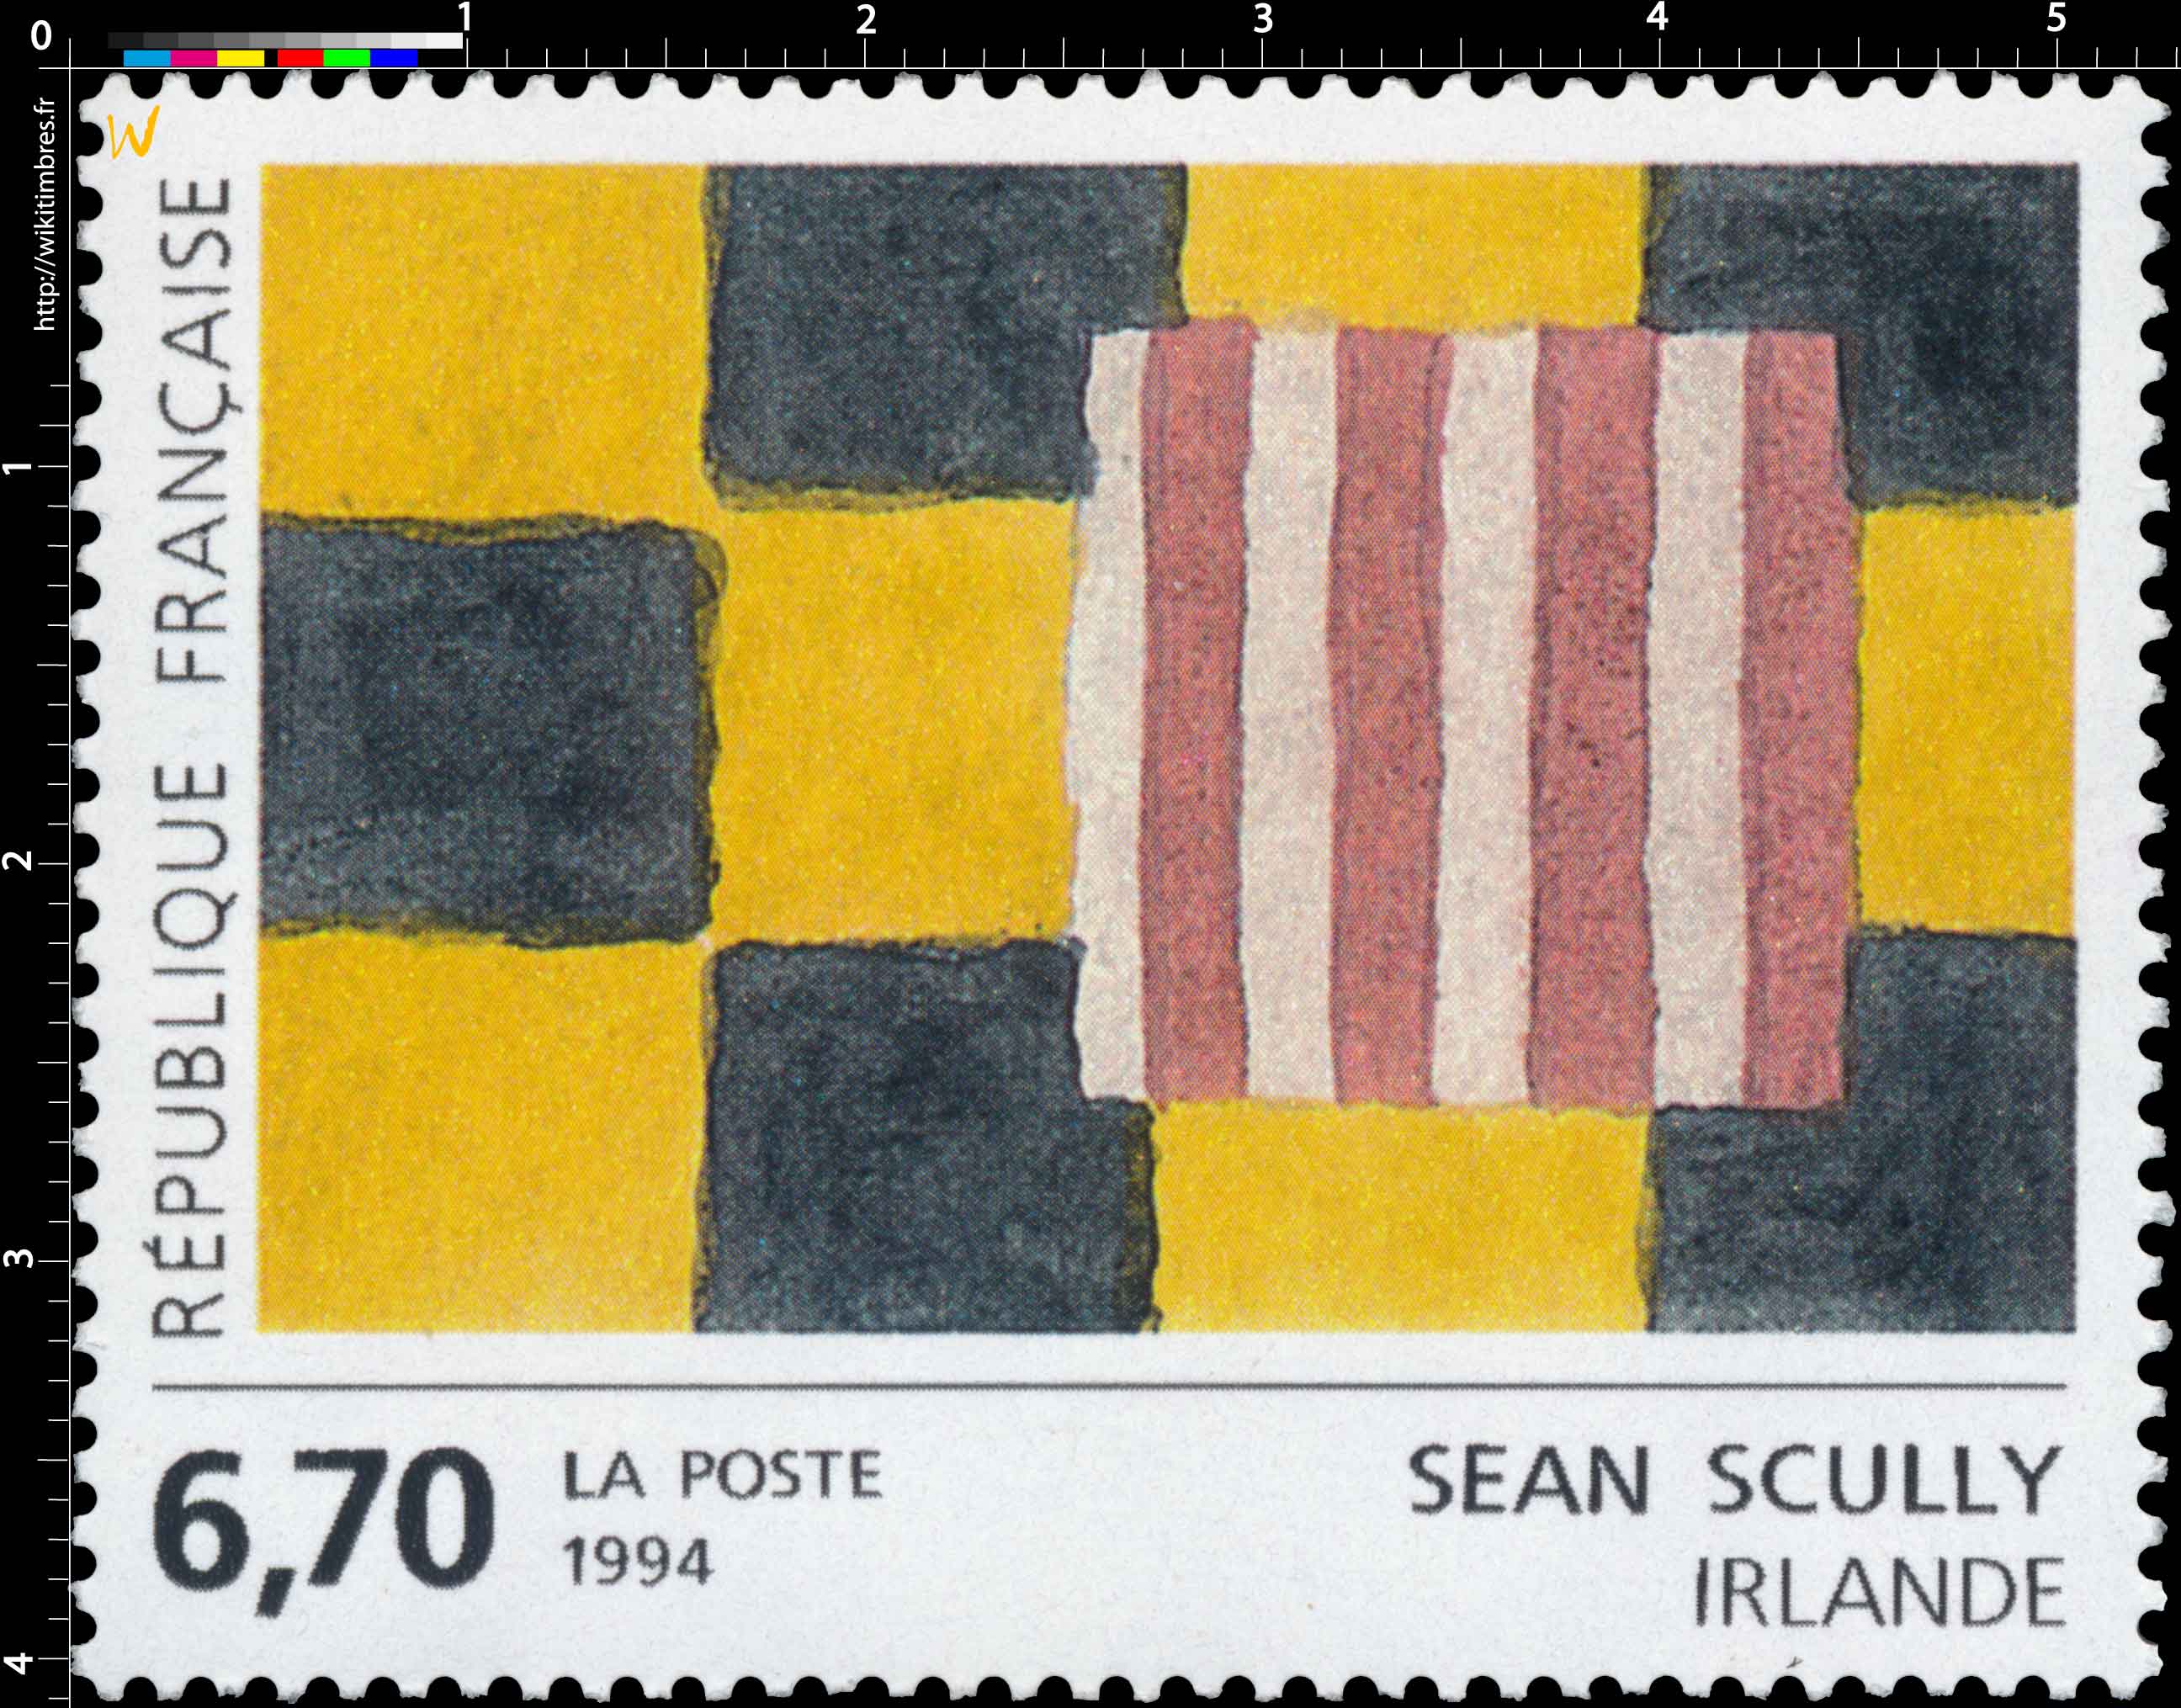 1994 SEAN SCULLY Irlande